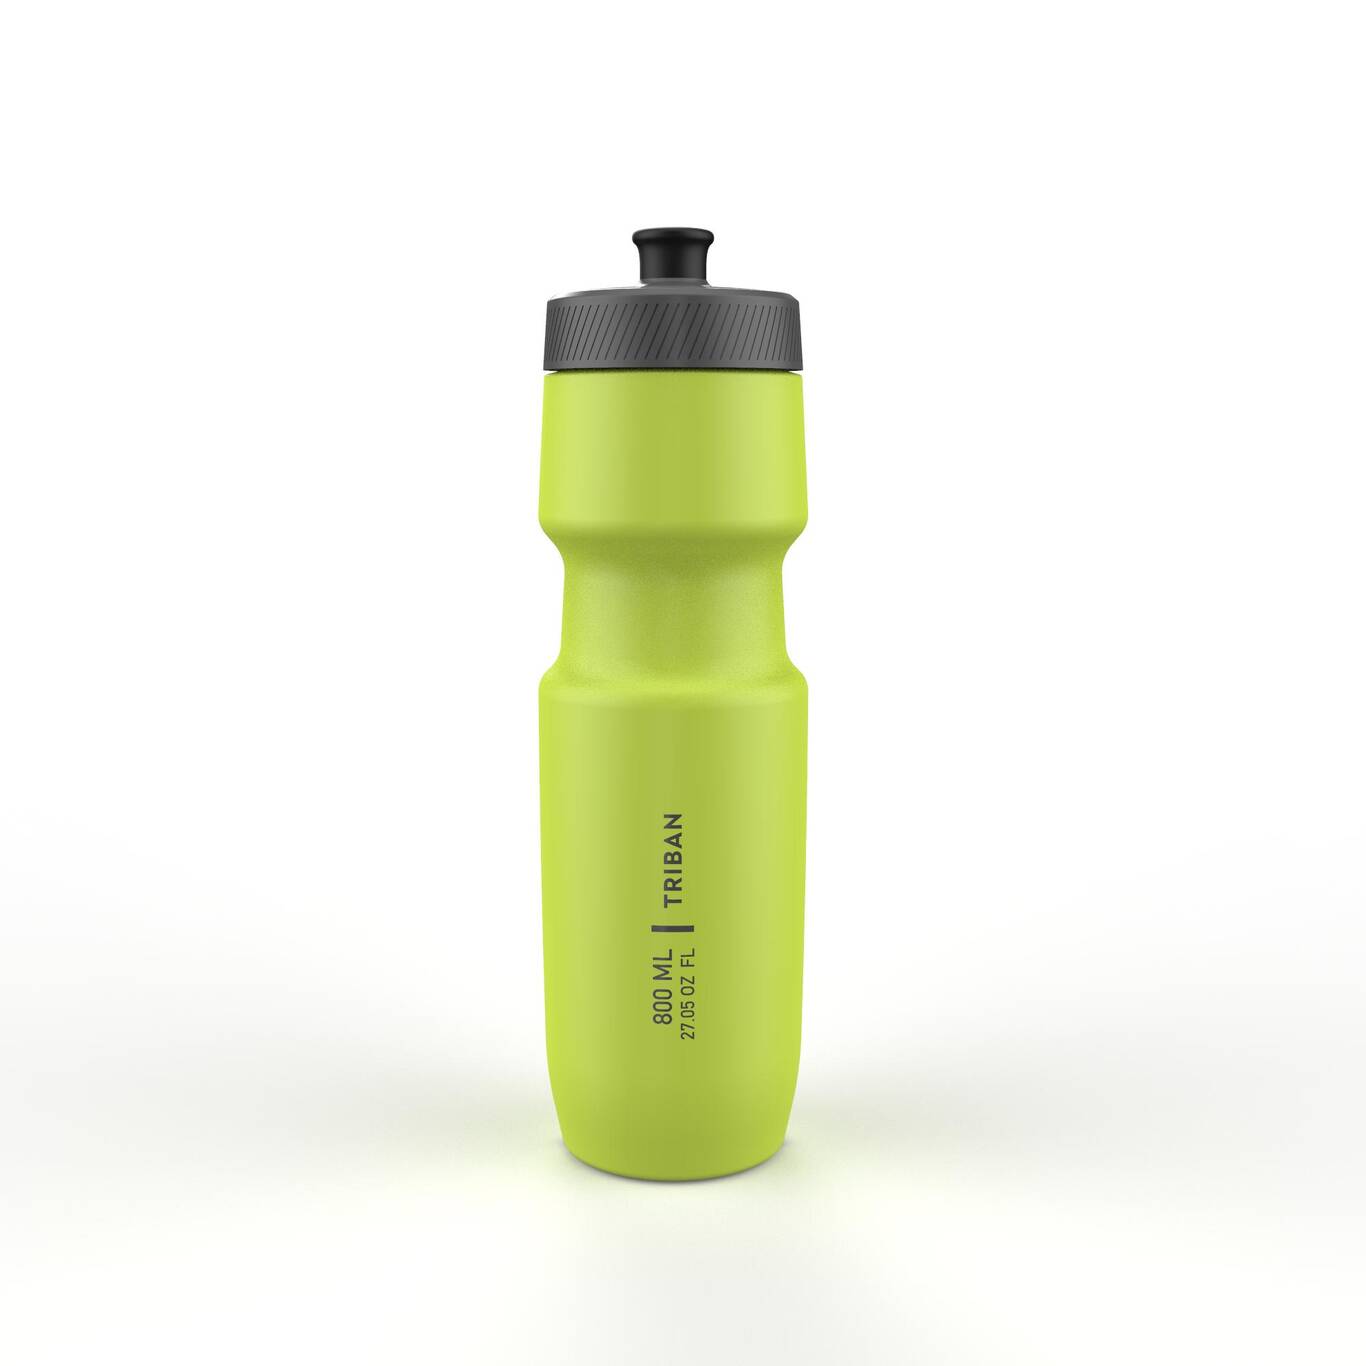 800 ml L Cycling Water Bottle SoftFlow - Yellow